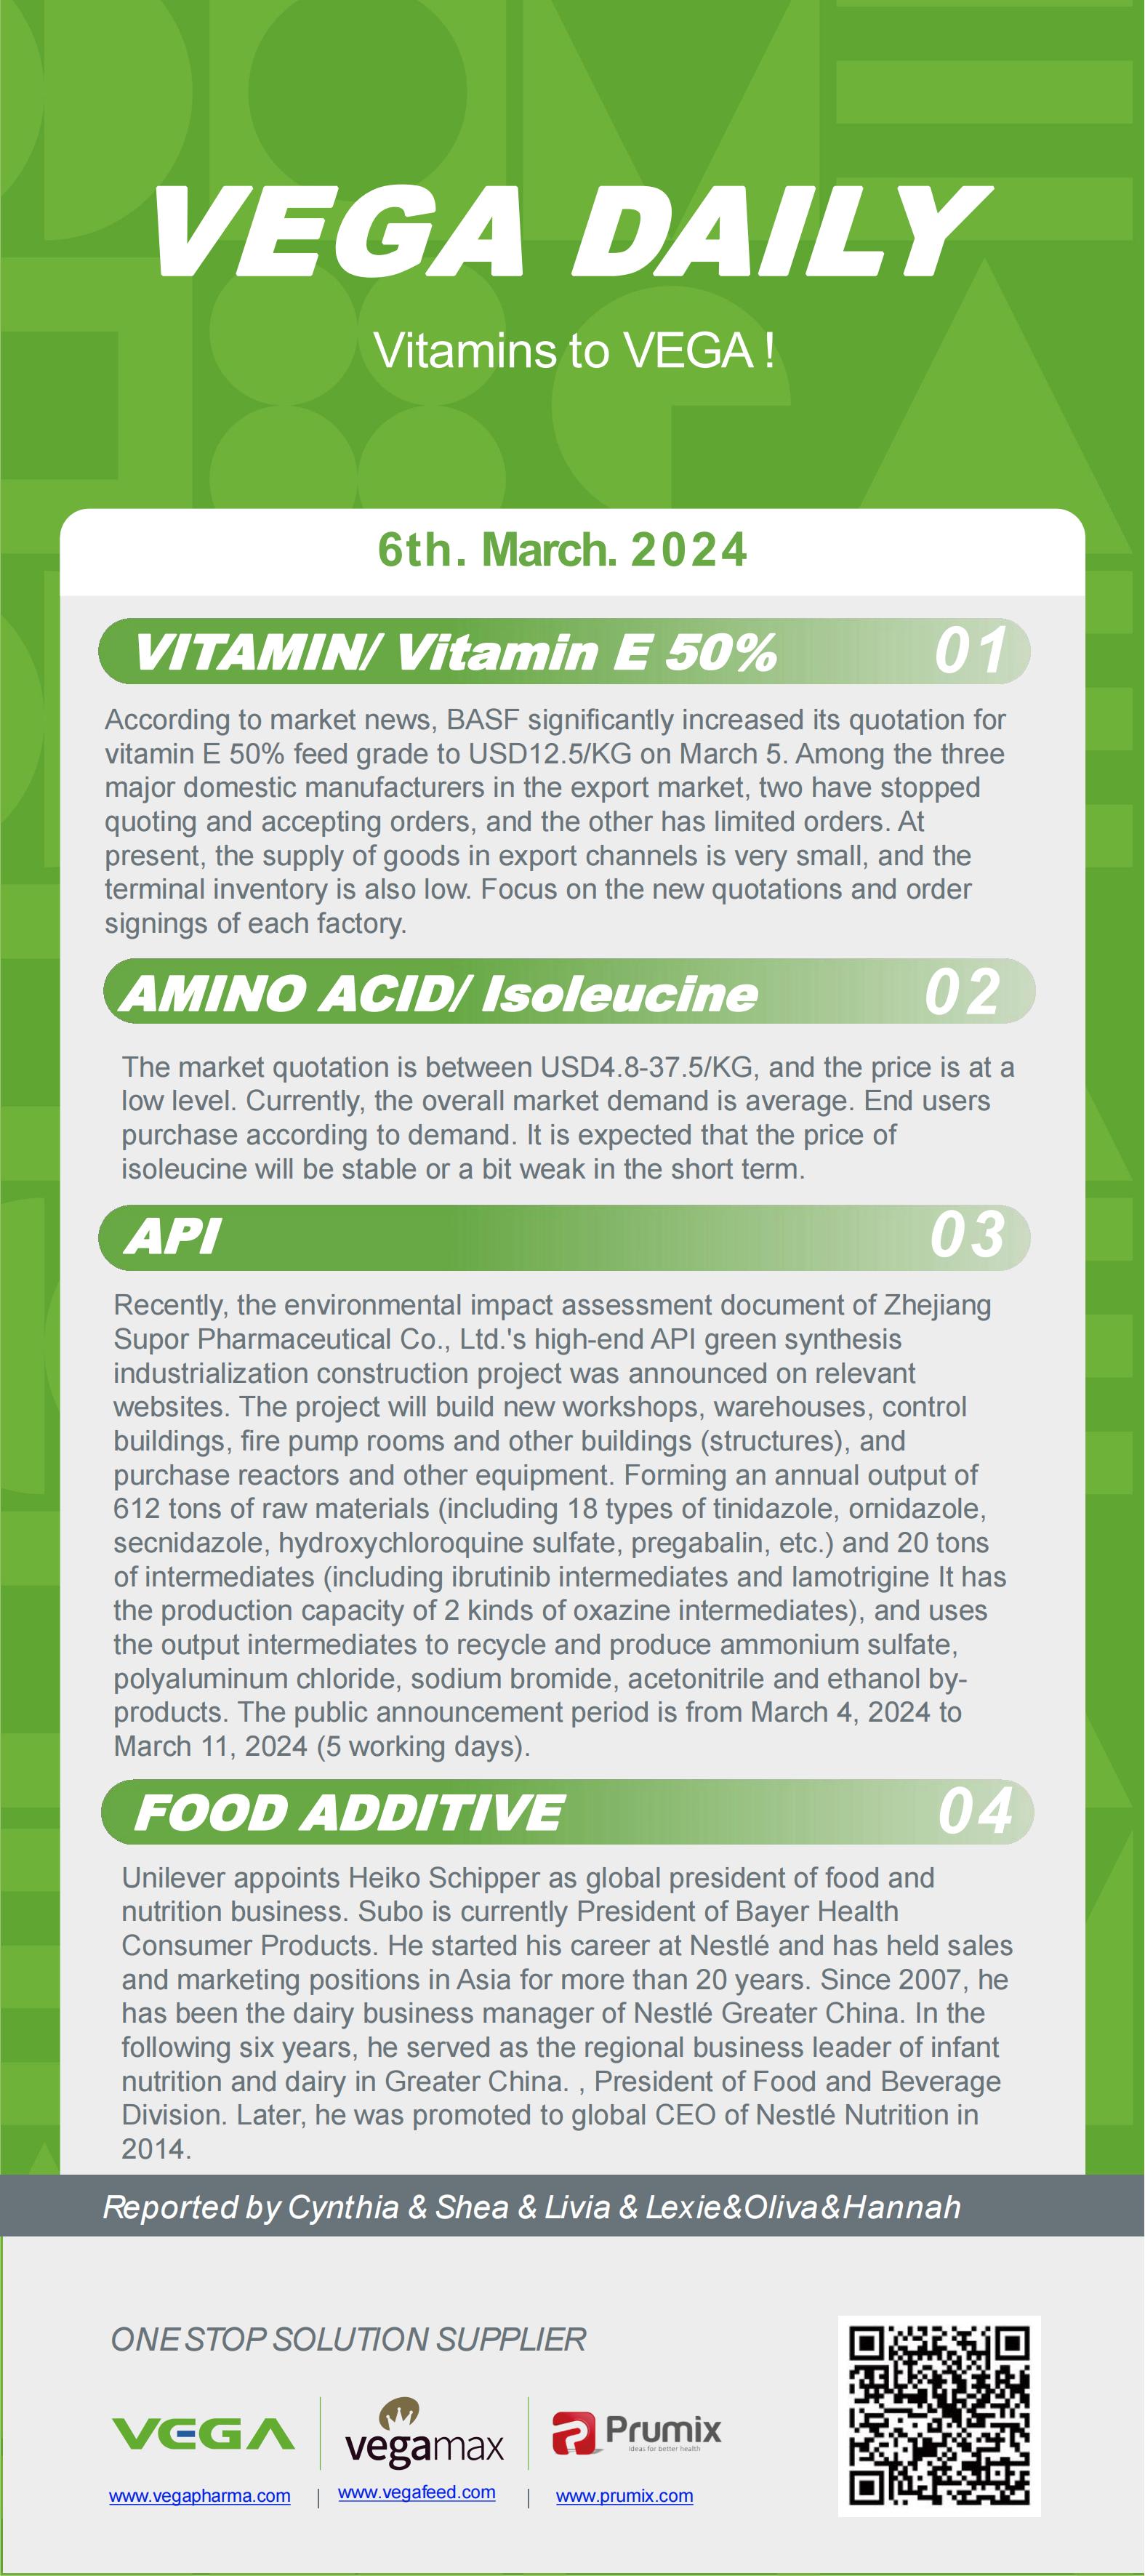 Vega Daily Dated on Mar 6th 2024 Vitamin Amino Acid APl Food Additives.jpg